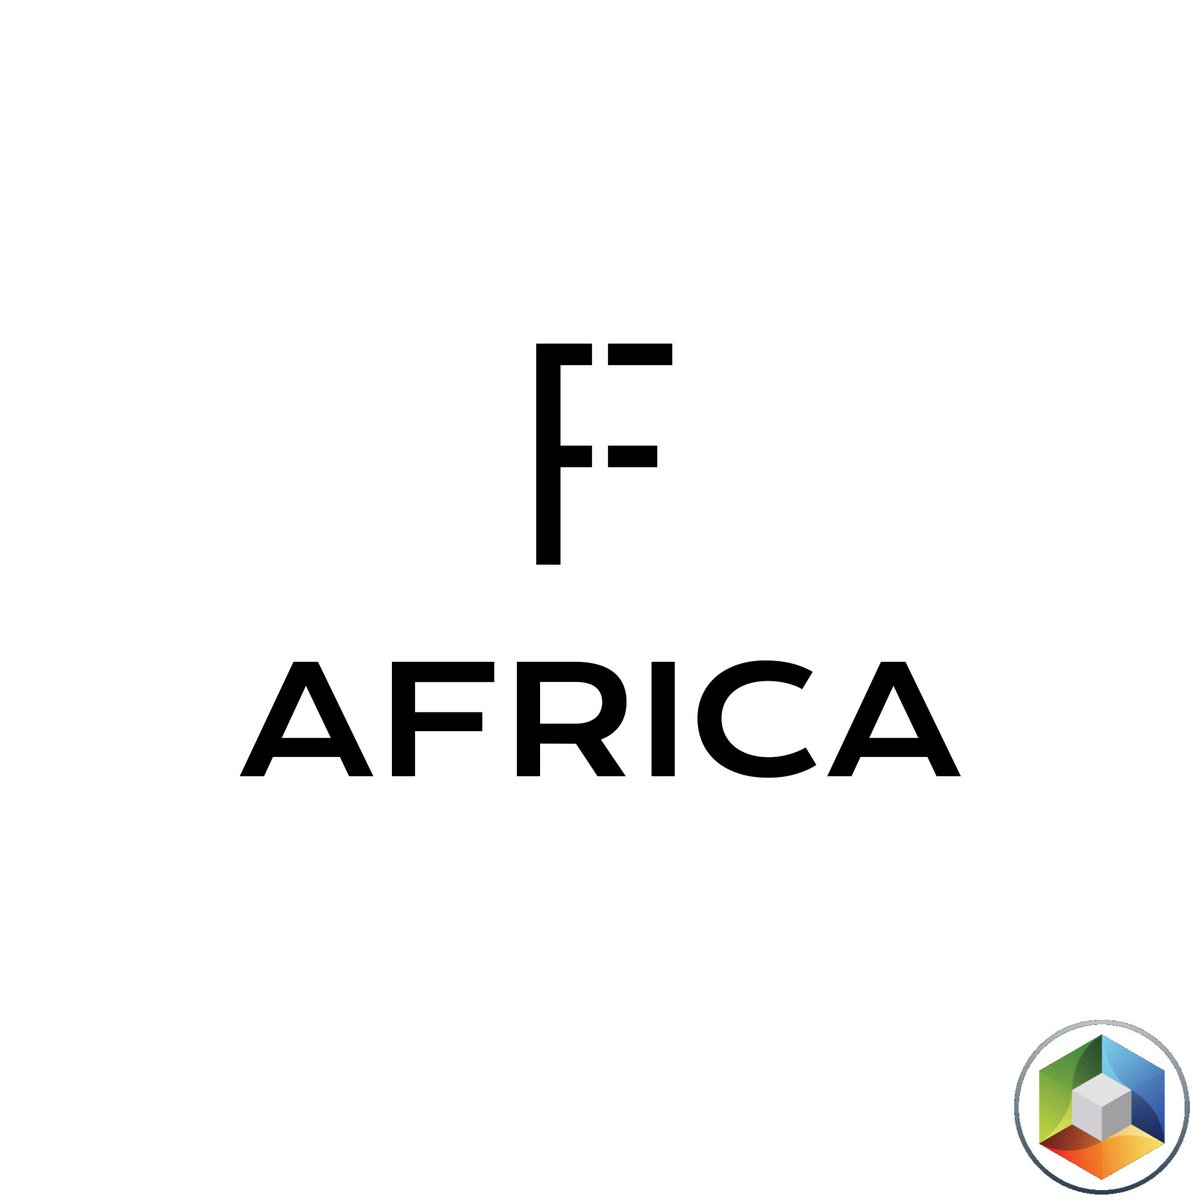 Africa Design Art.

#logo #logos #logodesign #logomaker #DESIGNART #design #designinspiration #Font #Designship2024 #designthinking #design #designjobs #DesignGrowth #designtwitter #logodesigner